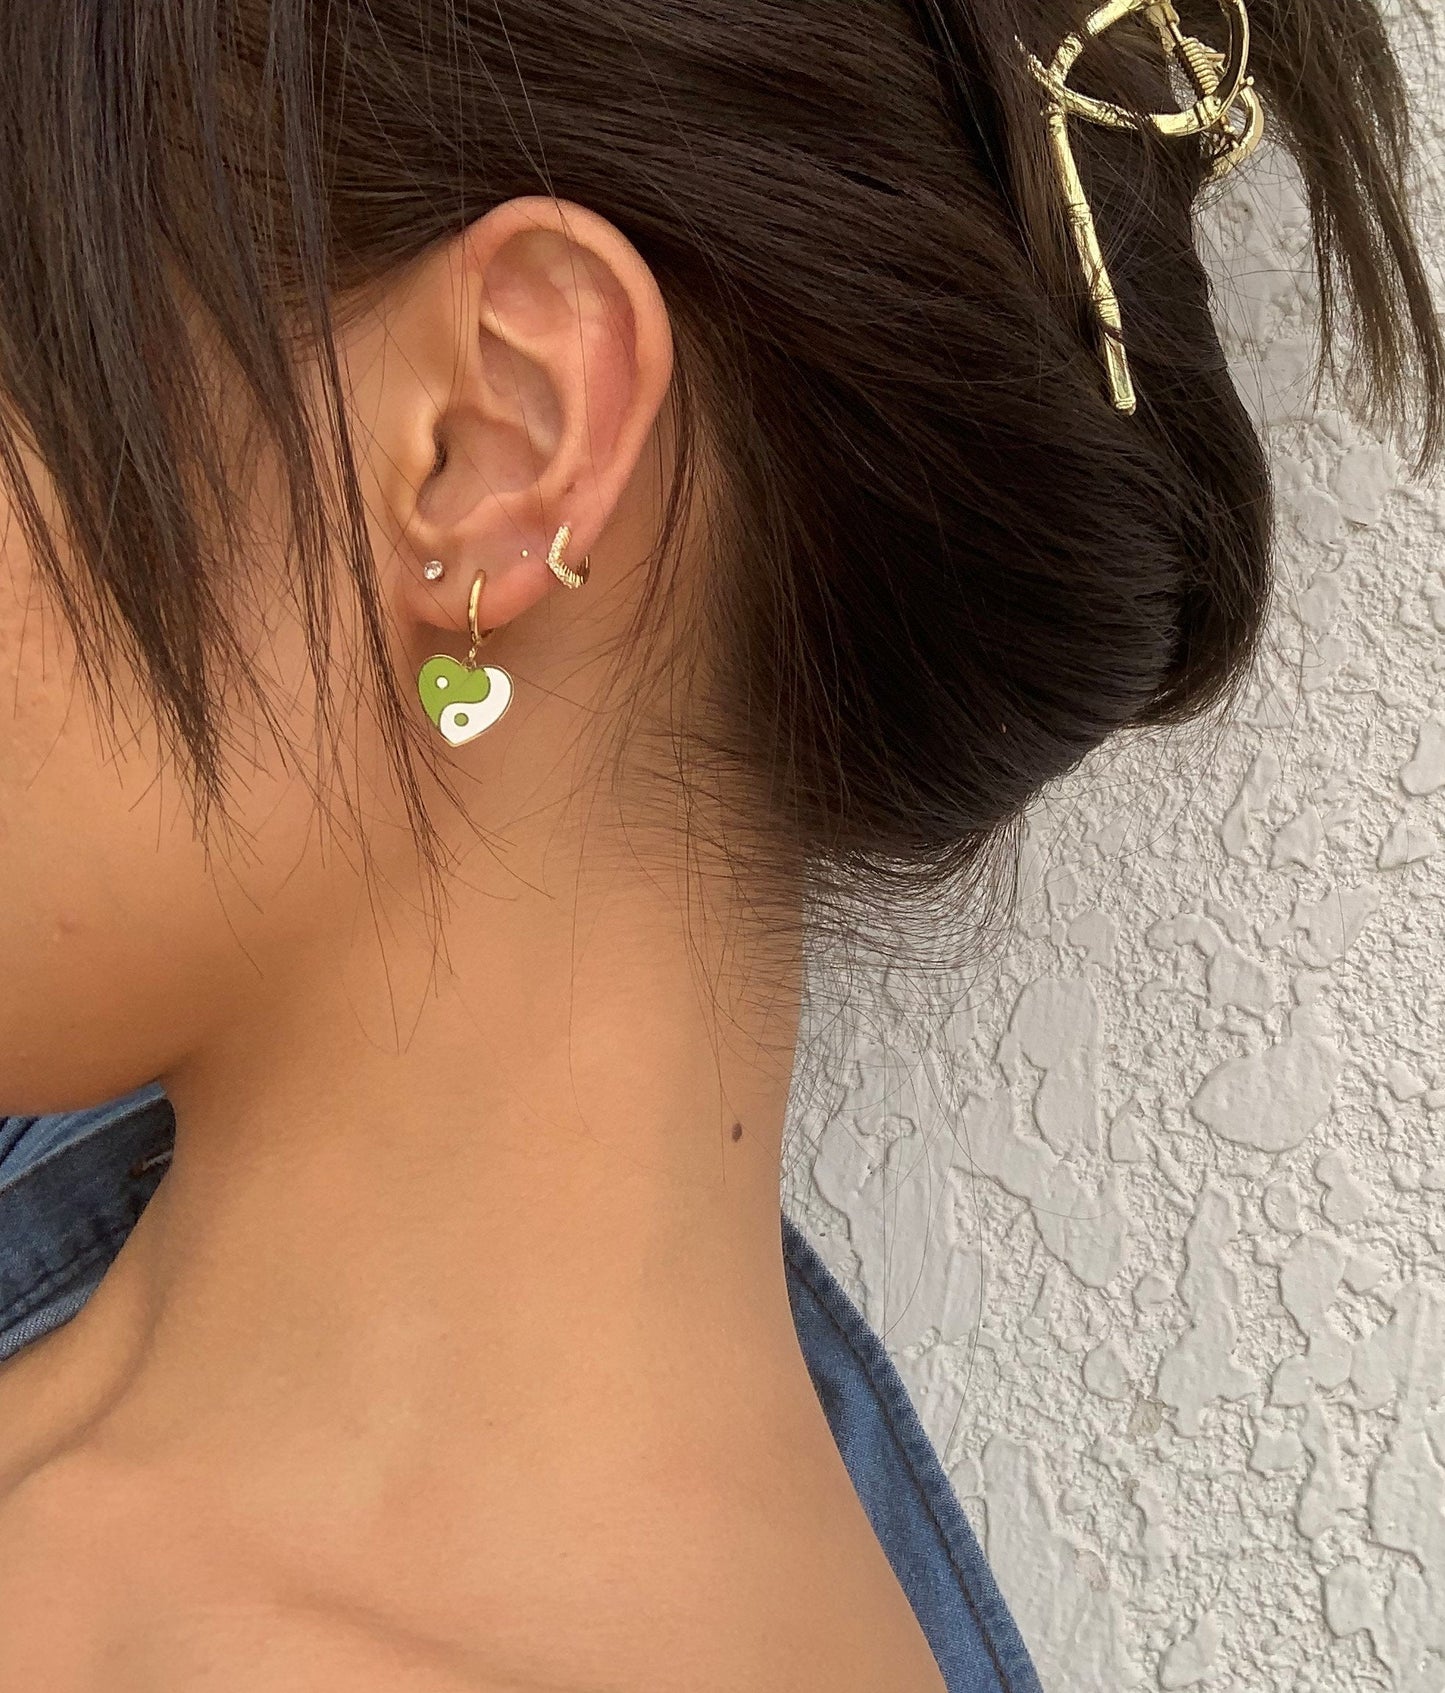 Yin yang heart earrings